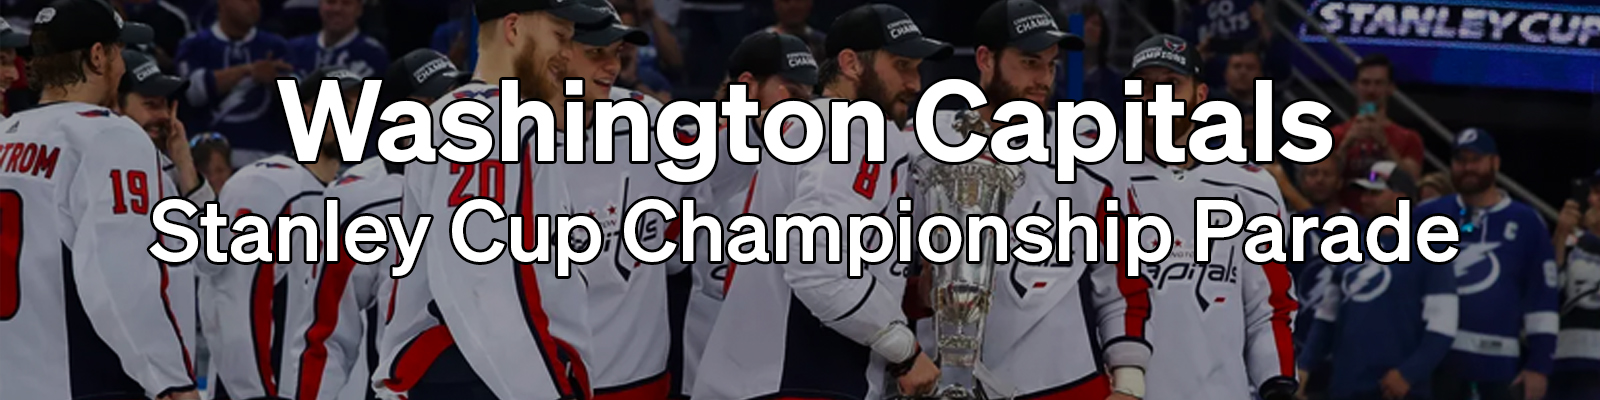 Washington Capitals Stanley Cup Championship Parade!